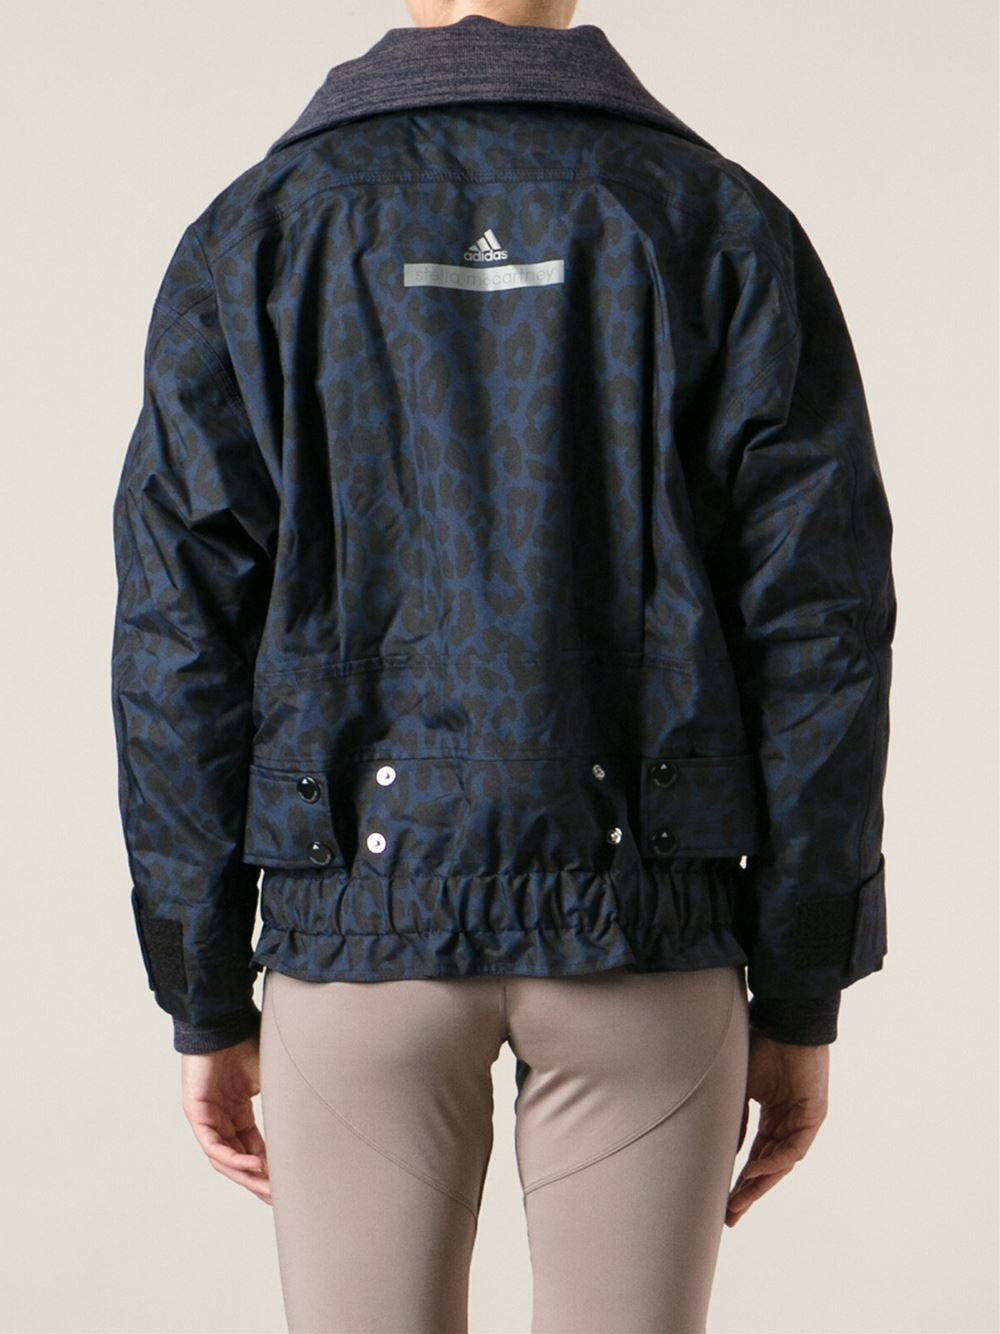 adidas By Stella McCartney Leopard Print Sports Jacket in Blue - Lyst